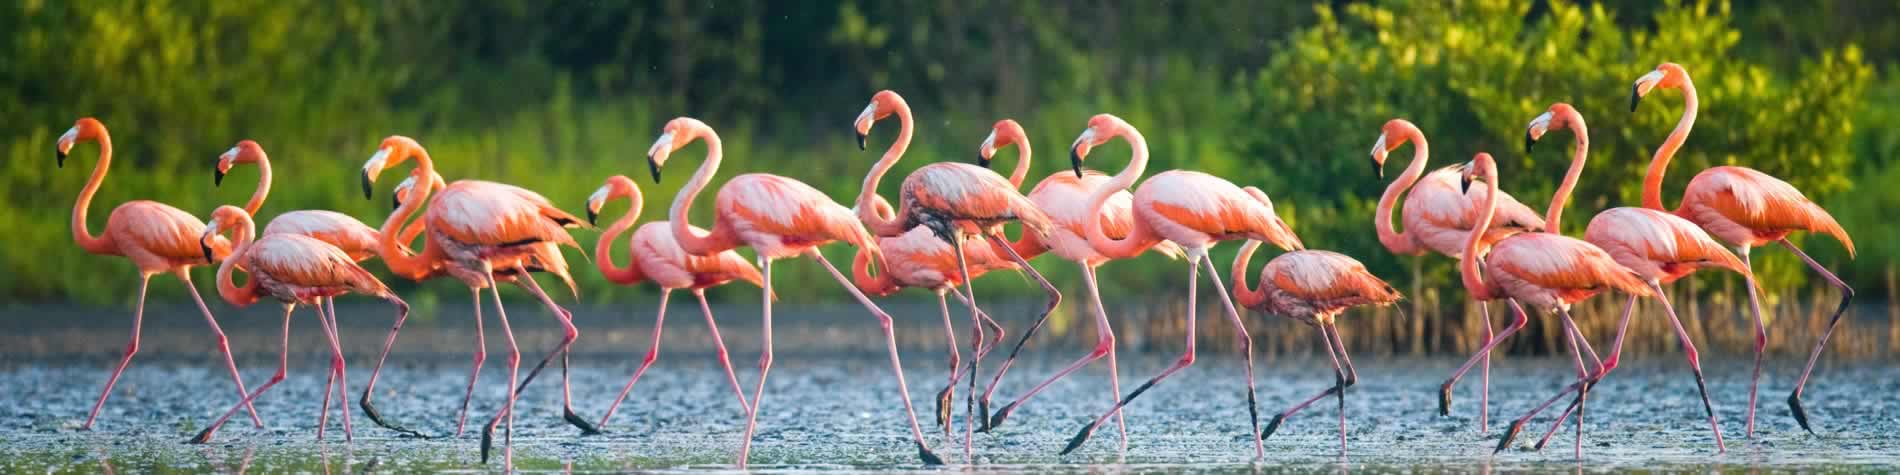 Flamingos on the swamps of Zapata